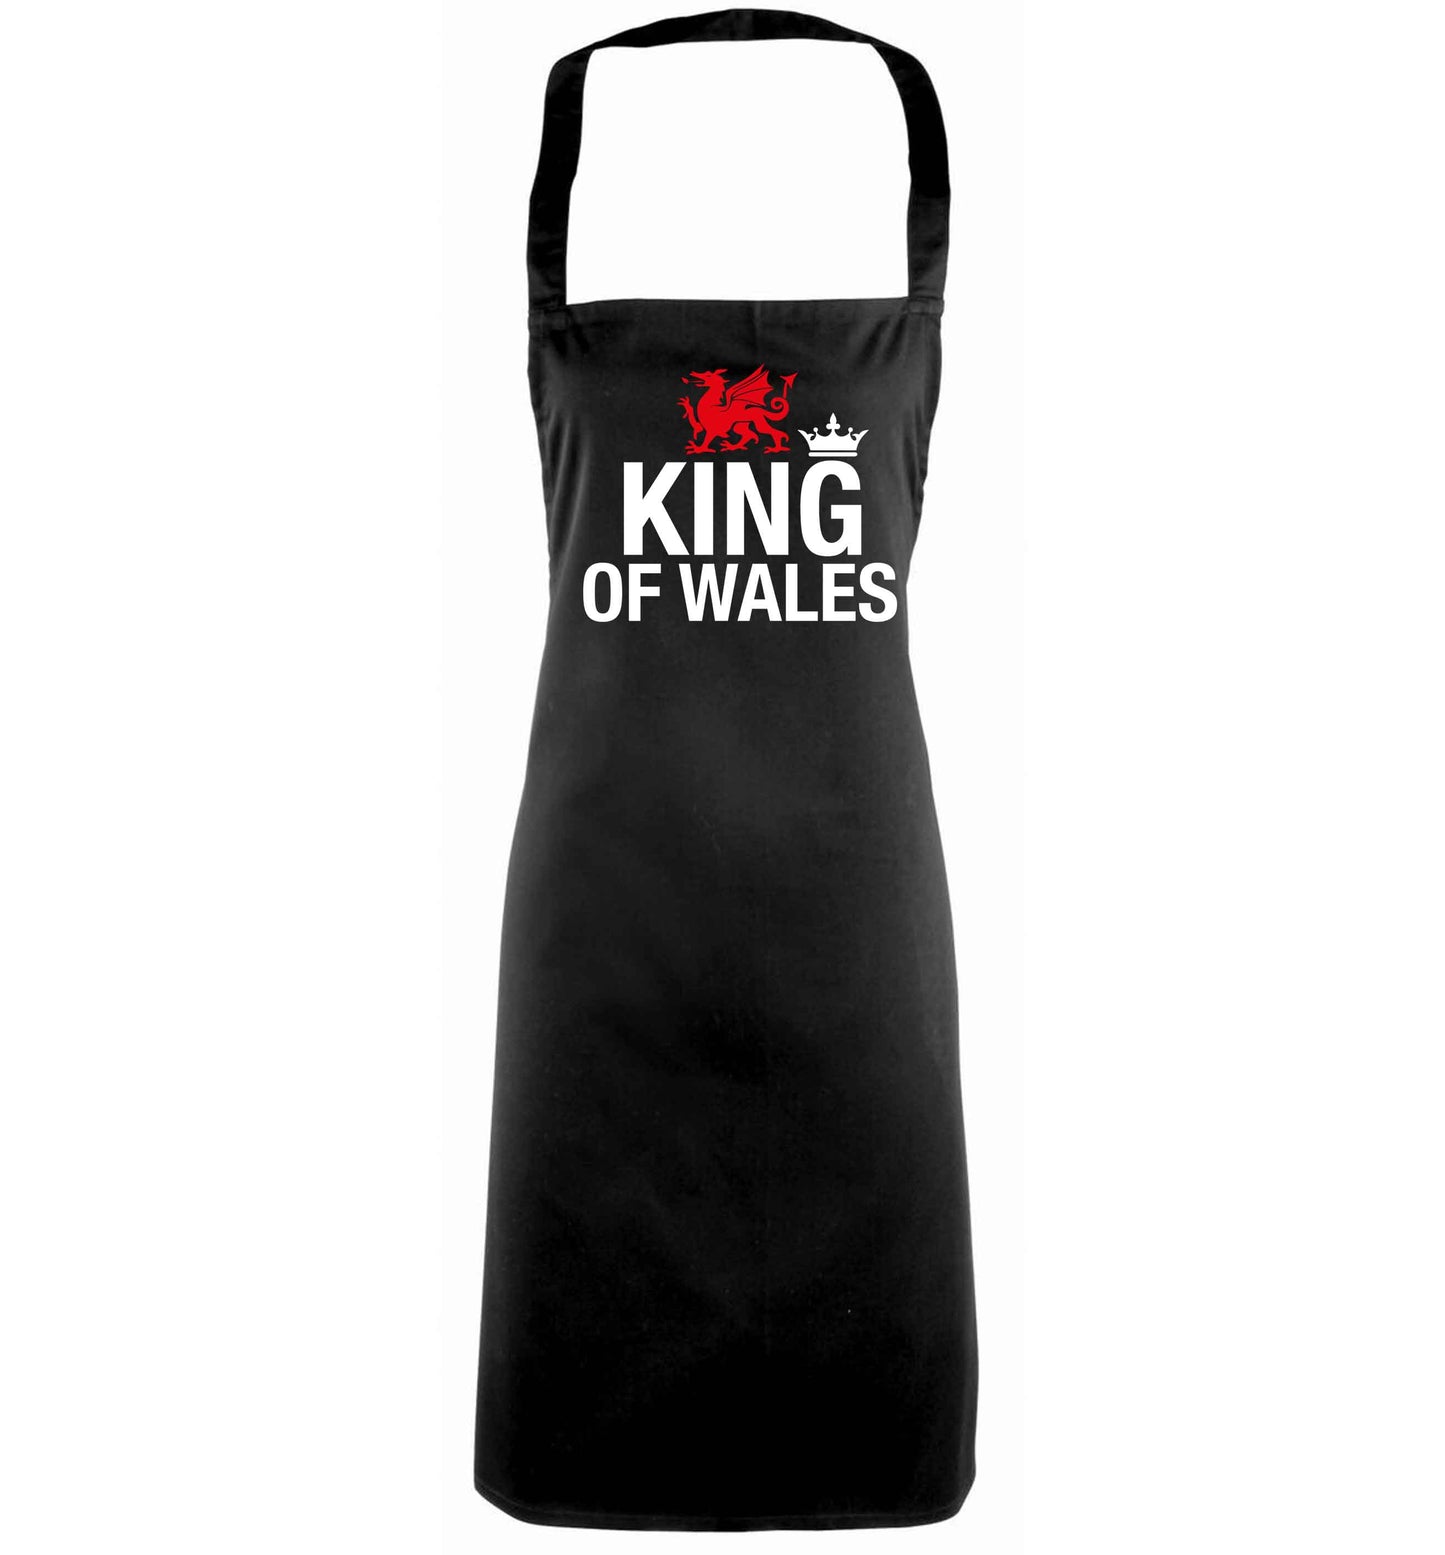 King of Wales black apron